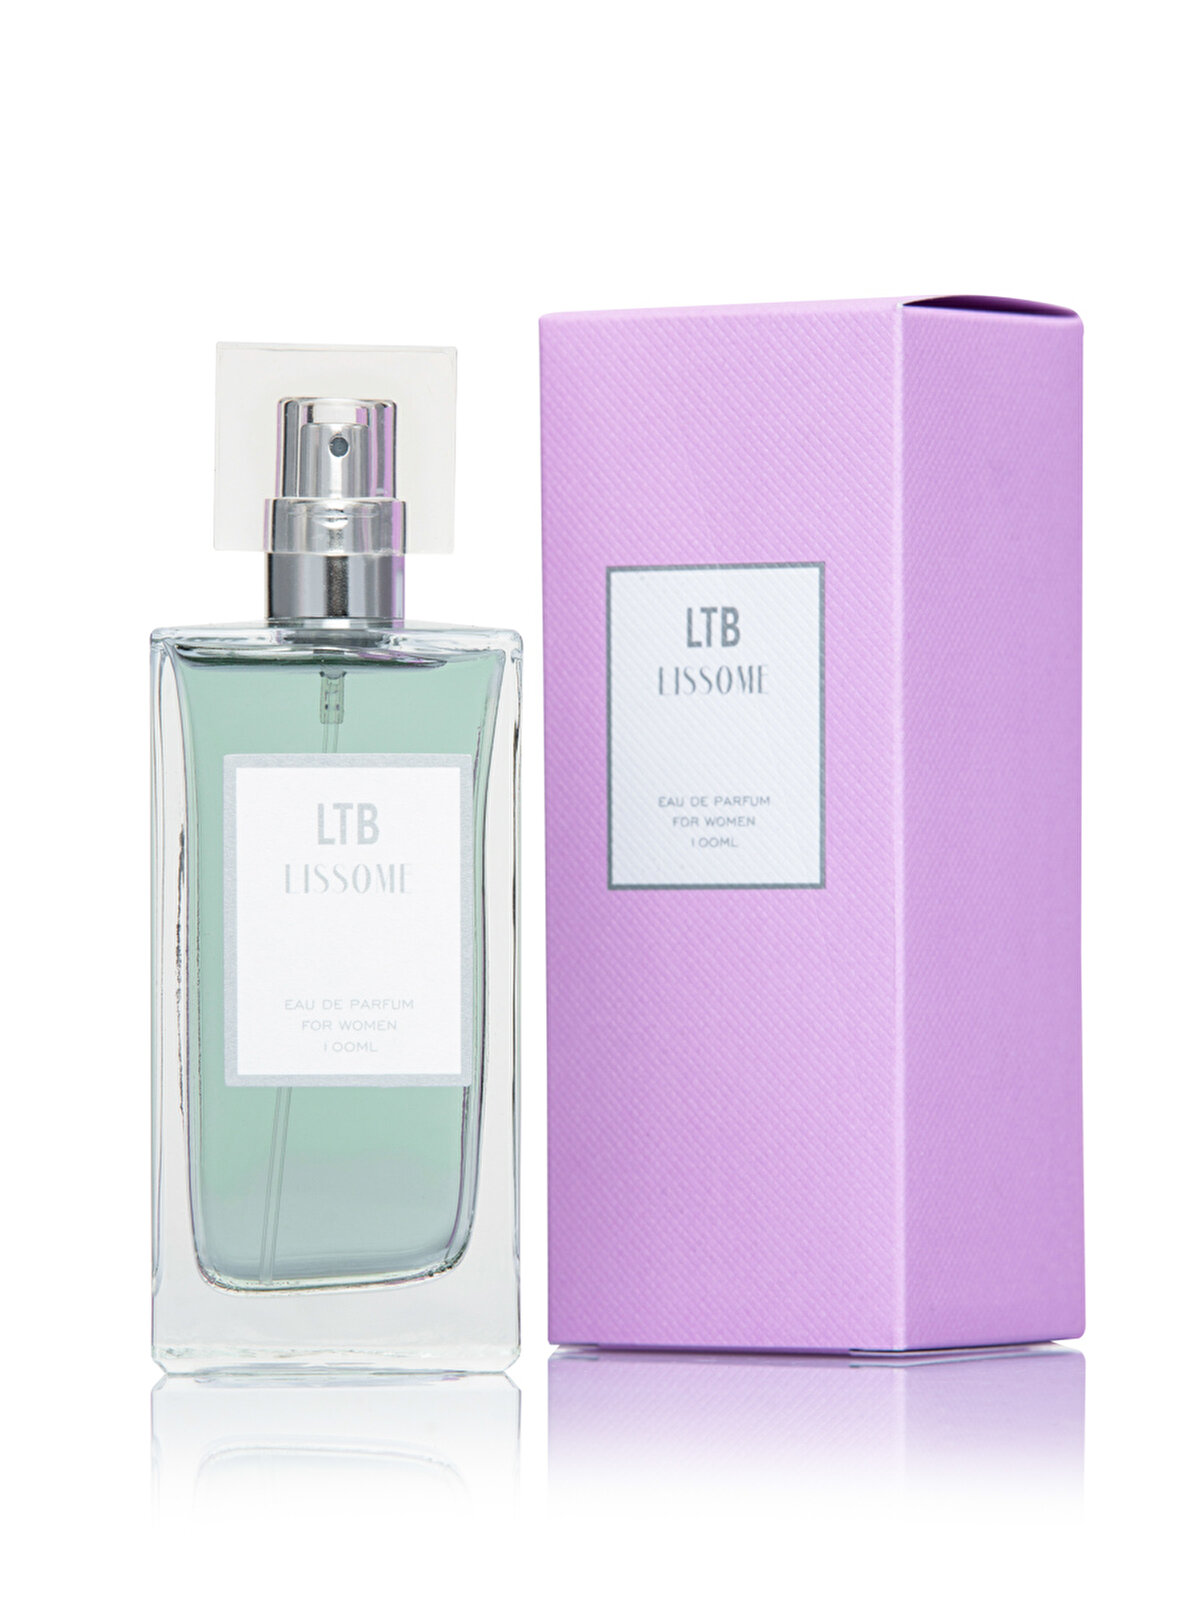 LTB Parfum. 1